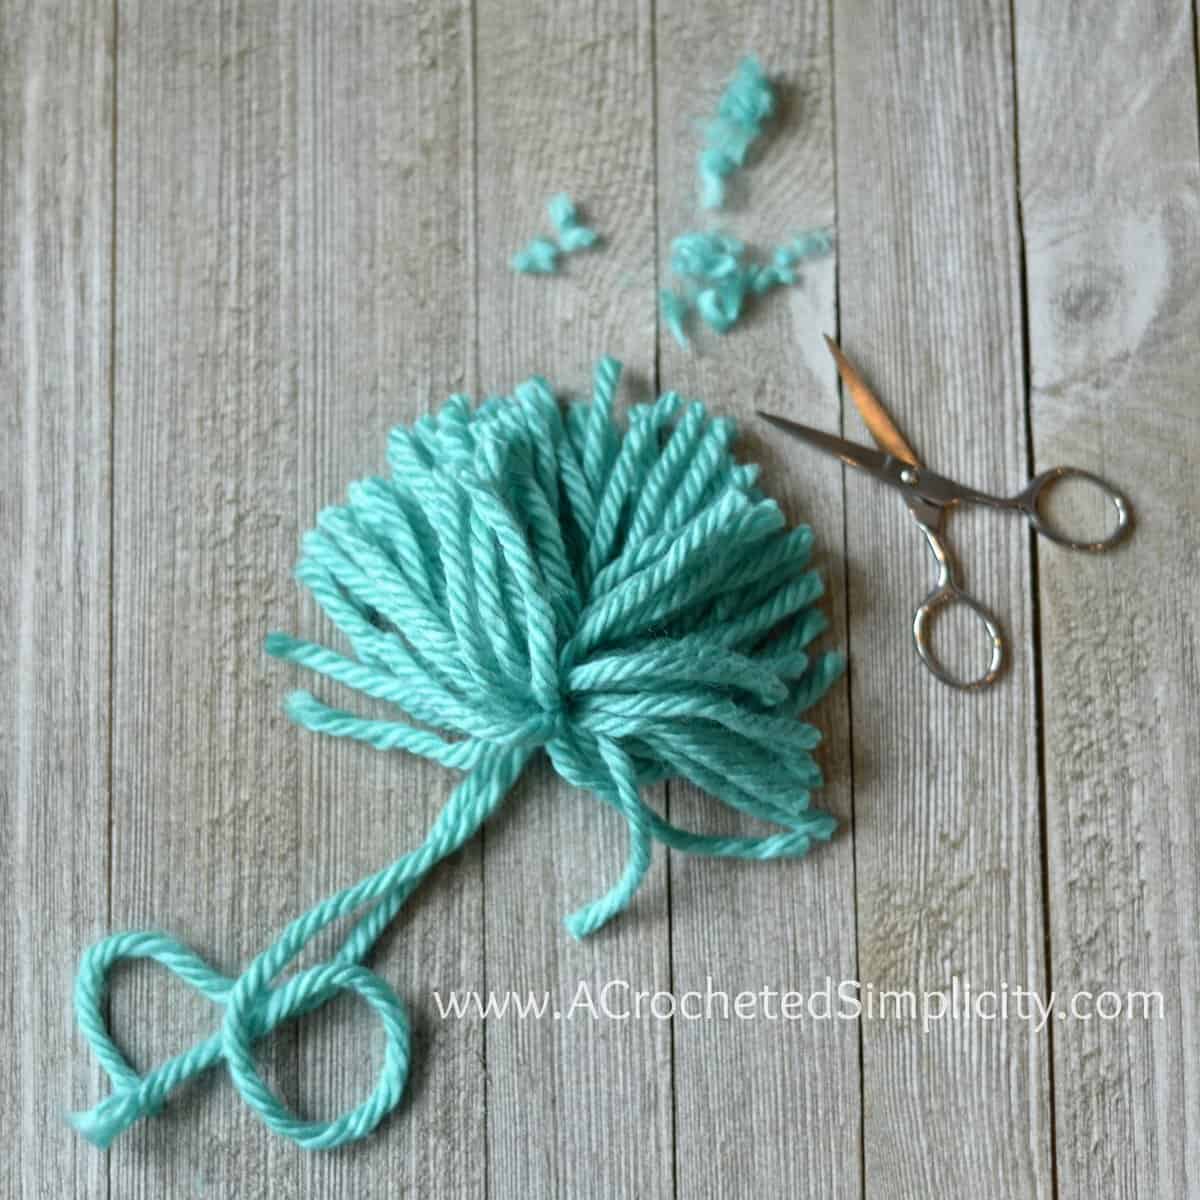 Almindeligt galleri mave How to Make a Pom Pom - A Crocheted Simplicity